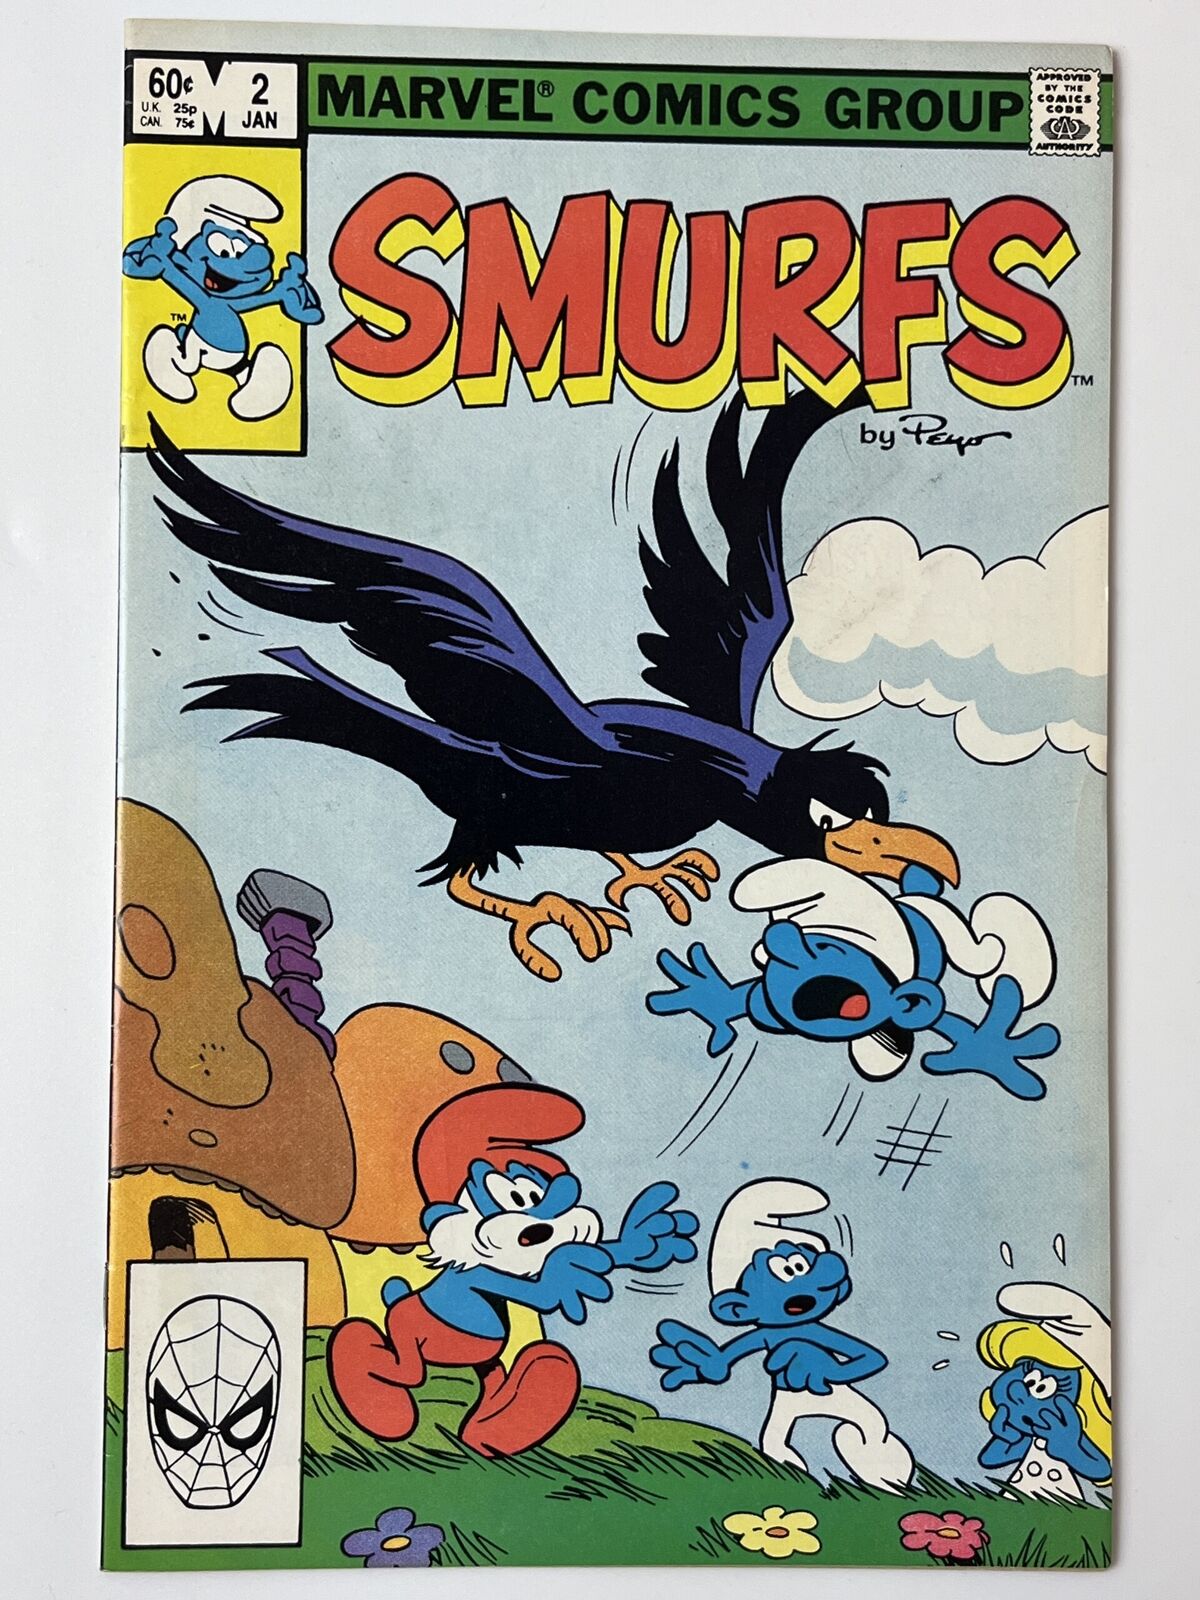 Smurfs #2 (1983) in 8.0 Very Fine